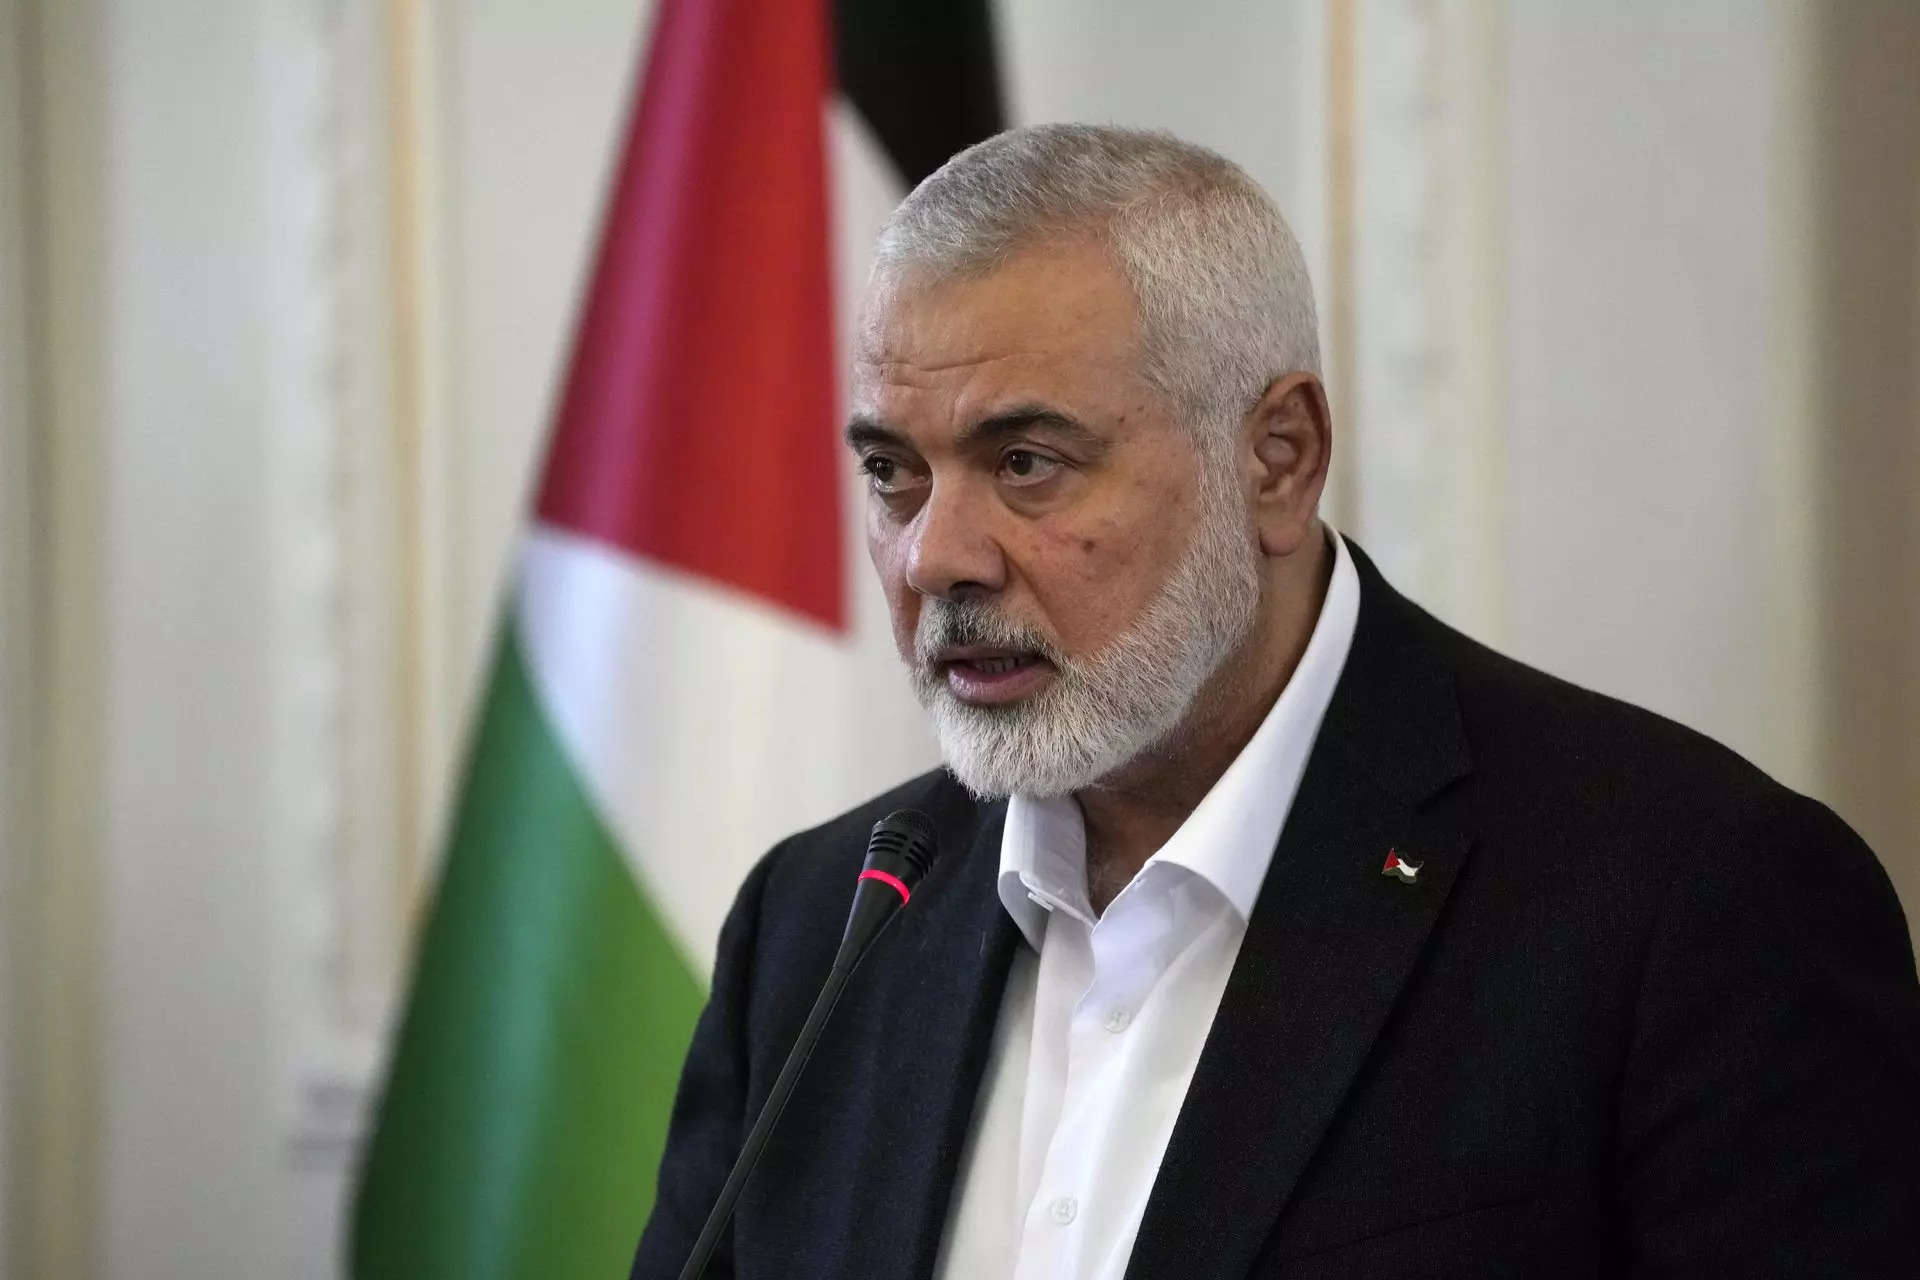 Iran's Ismail Haniyeh, Hamas chief, had 13 kids and 4 siblings; Three children died in Israeli airstrike 